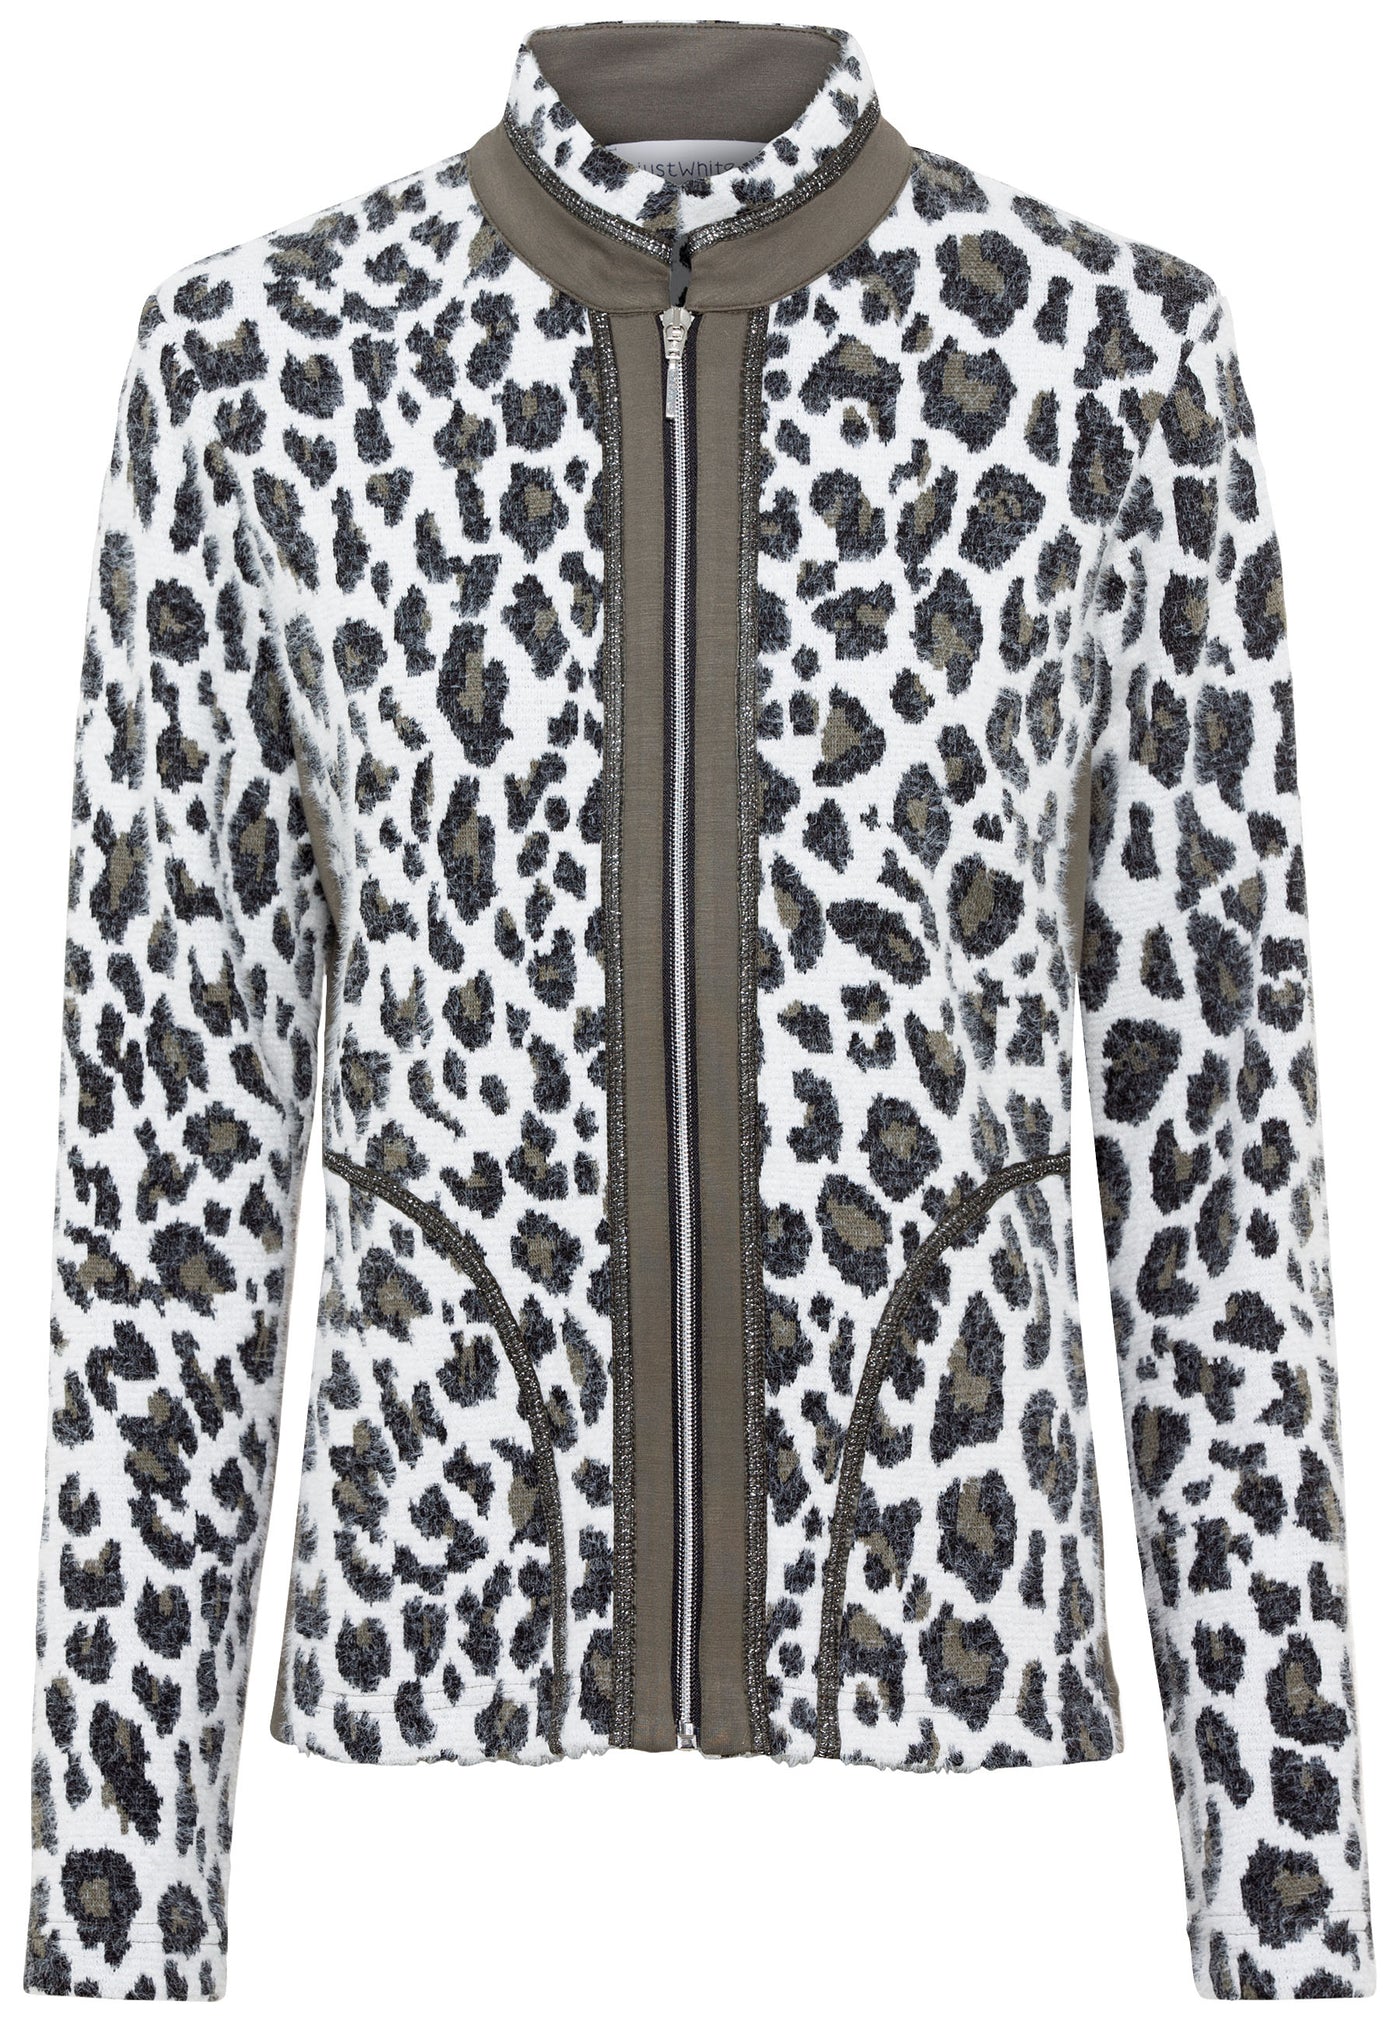 Leopard Print Zip Up Jacket With Khaki Trim